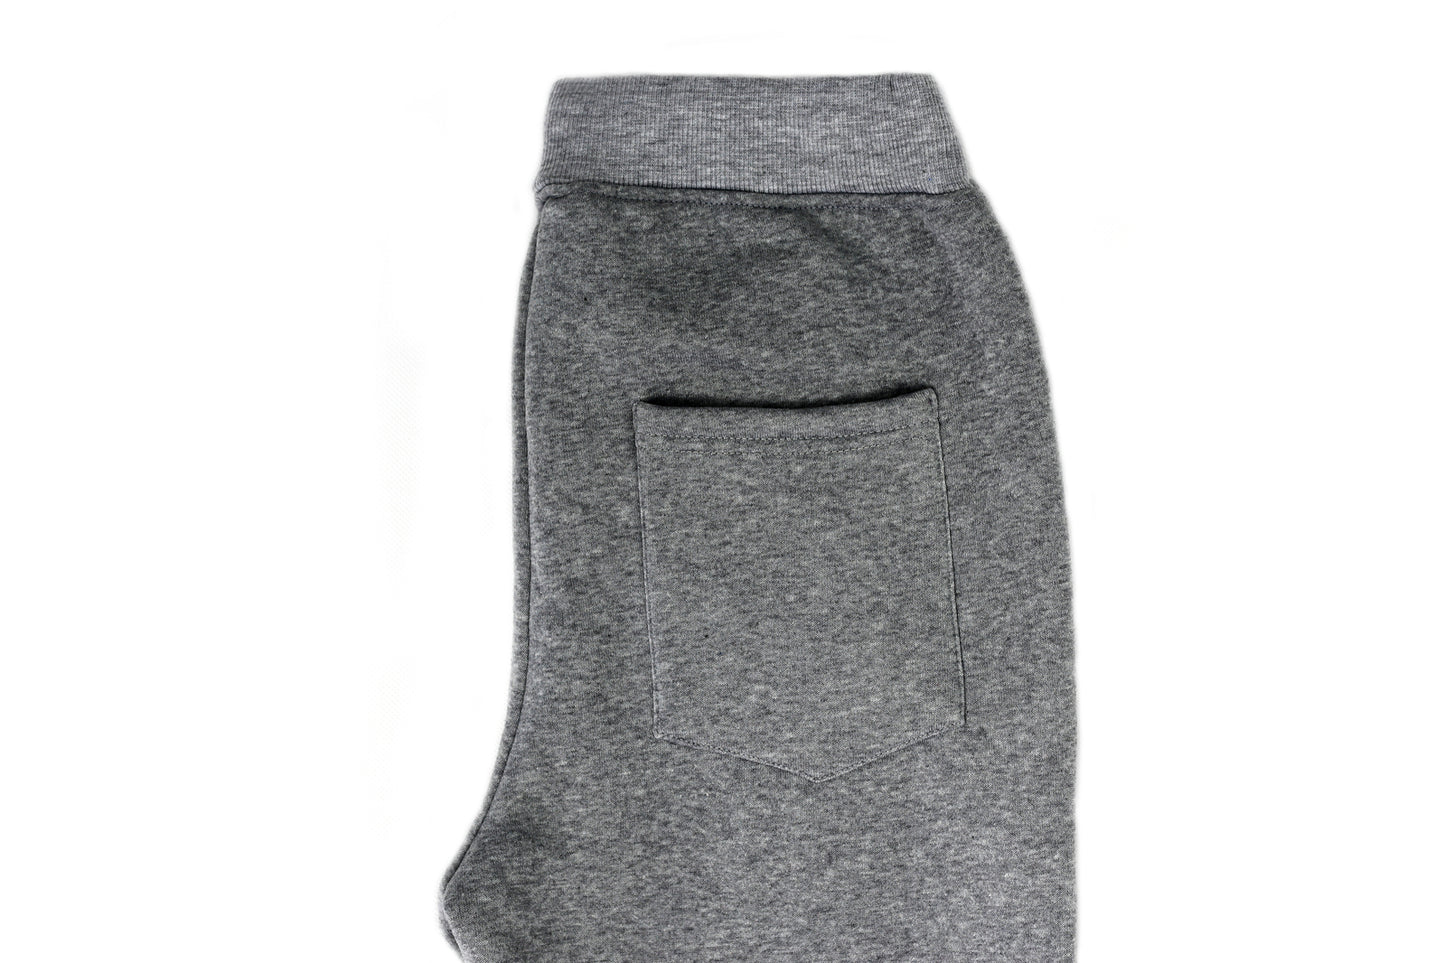 Mens Skinny Track Pants Joggers Trousers Gym Casual Sweat Cuffed Slim Trackies Fleece - Heather Grey - XL